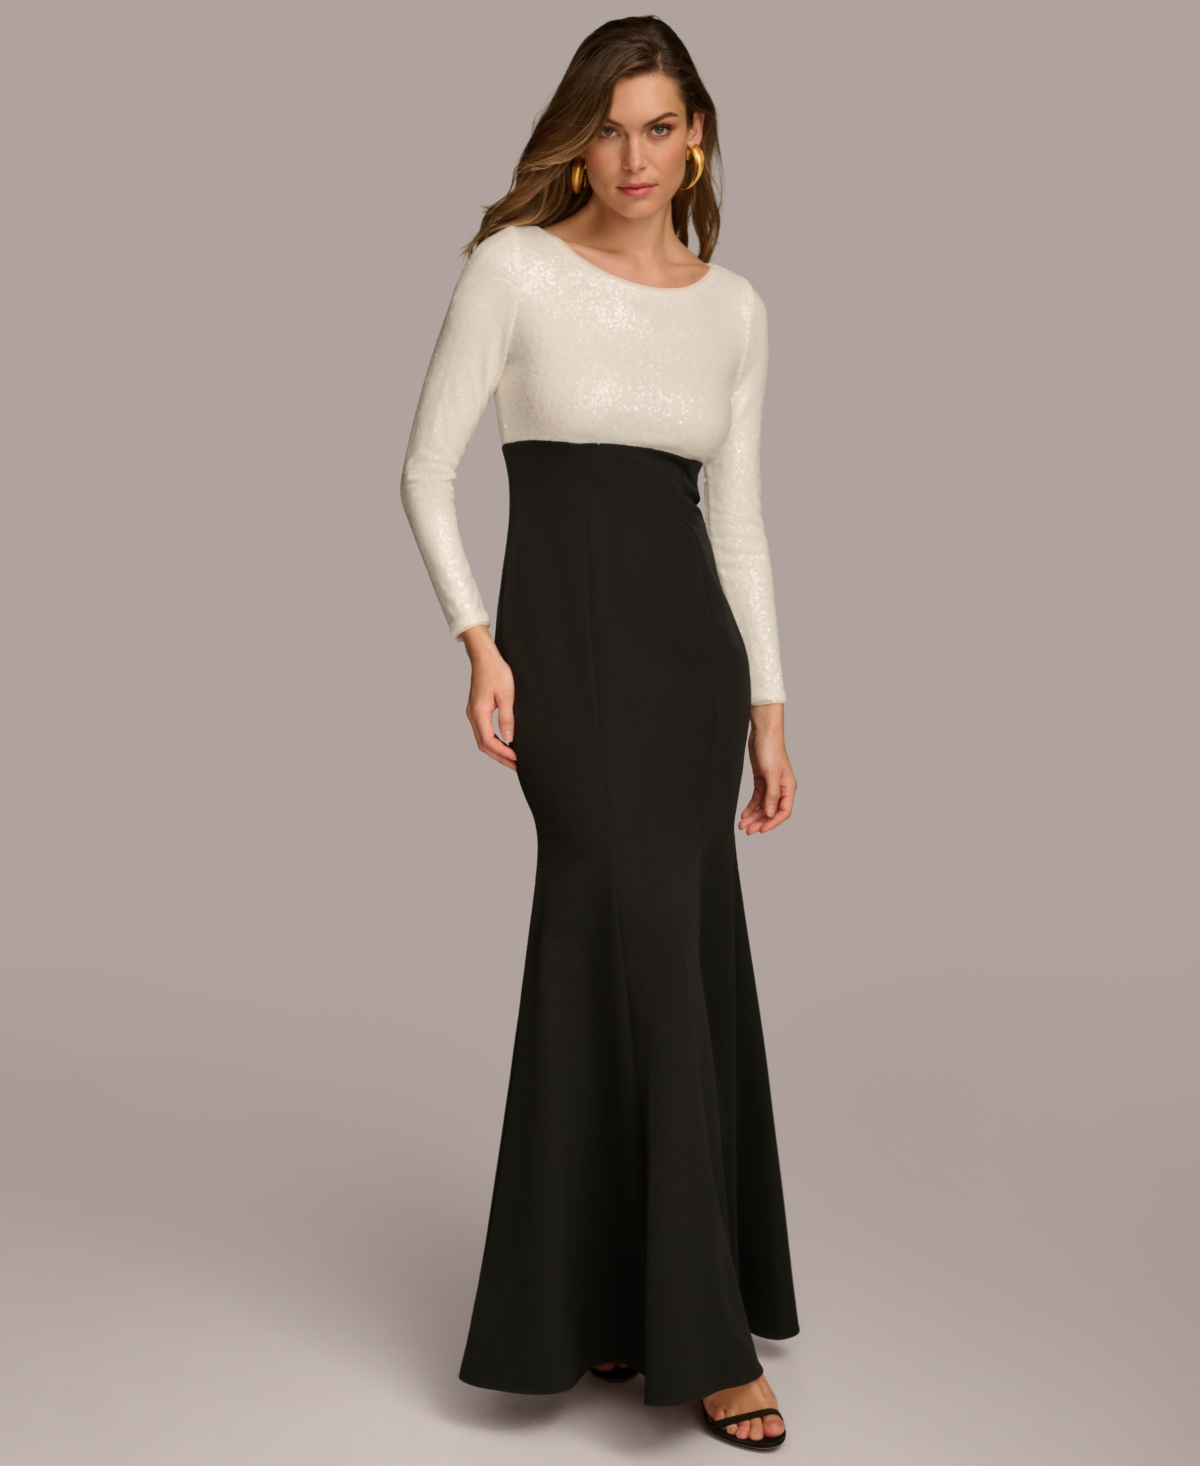 Women's Long-Sleeve Sequin Top Gown - Ivory/Black